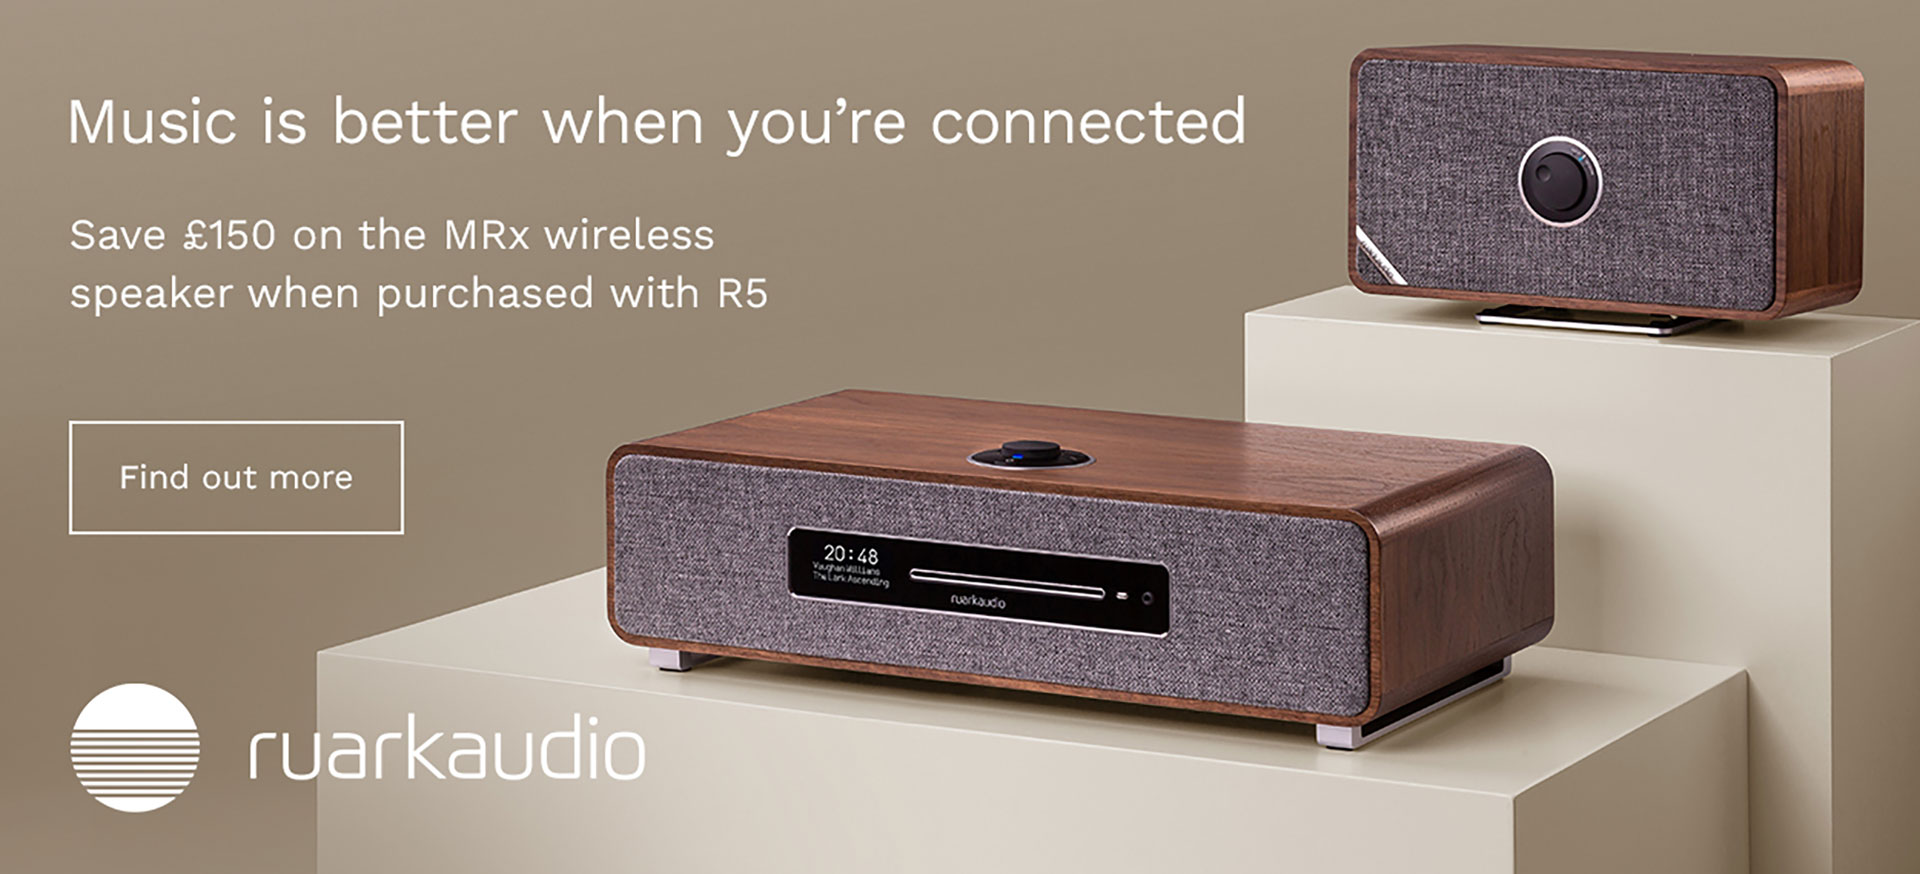 Save £150 On Ruark R5 + MRx Speaker | Unilet Sound & Vision